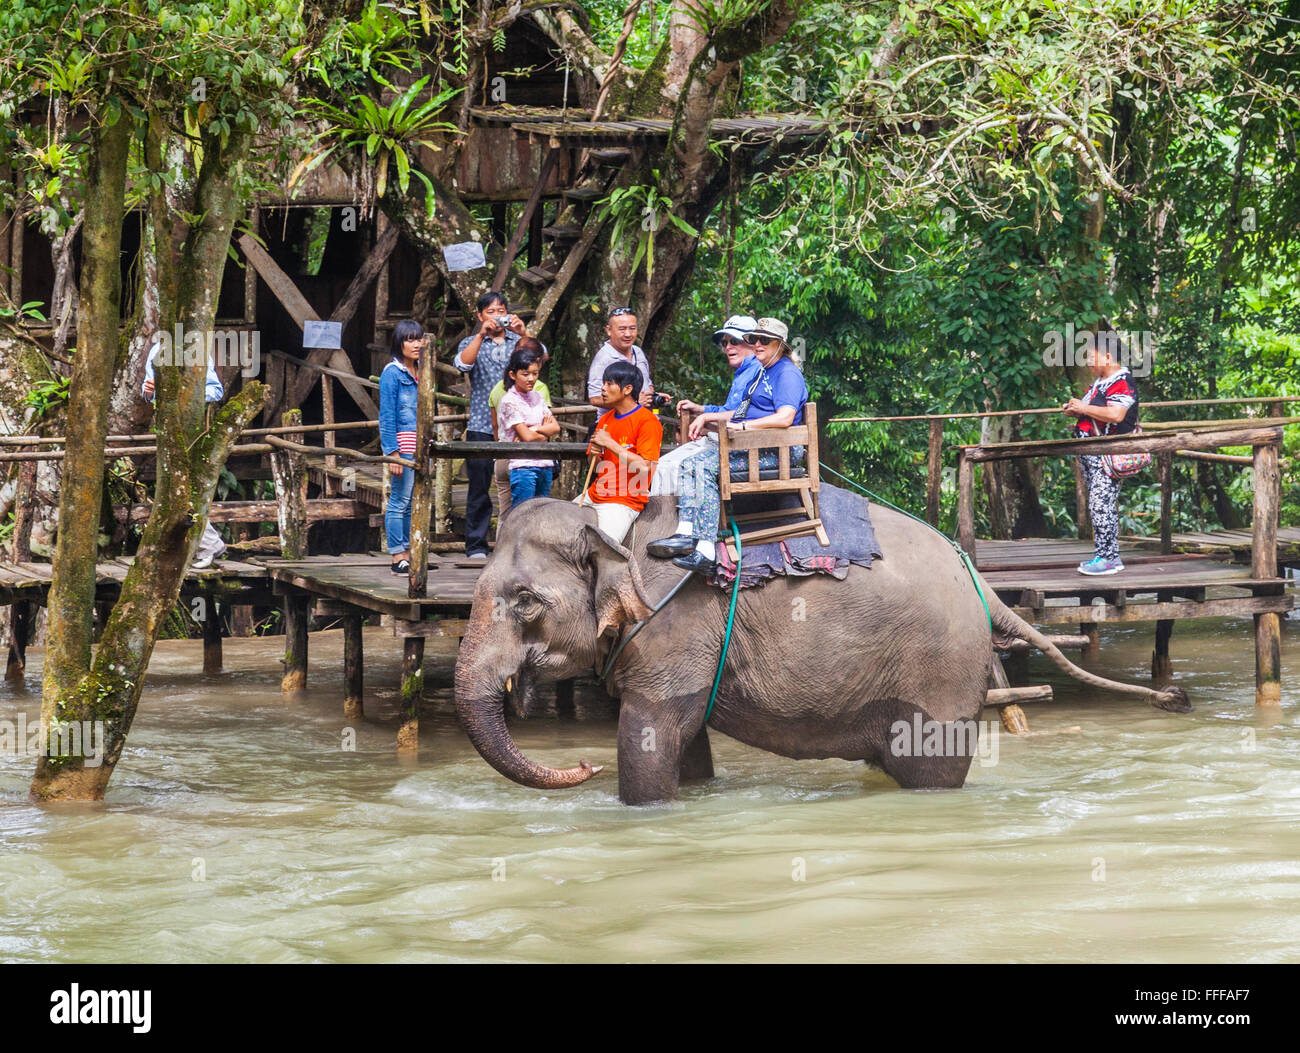 Laos, Luang Prabang Province, tourist rides on a Lao elepant from the elephant village sanctuary at Tat Sae Waterfalls Stock Photo